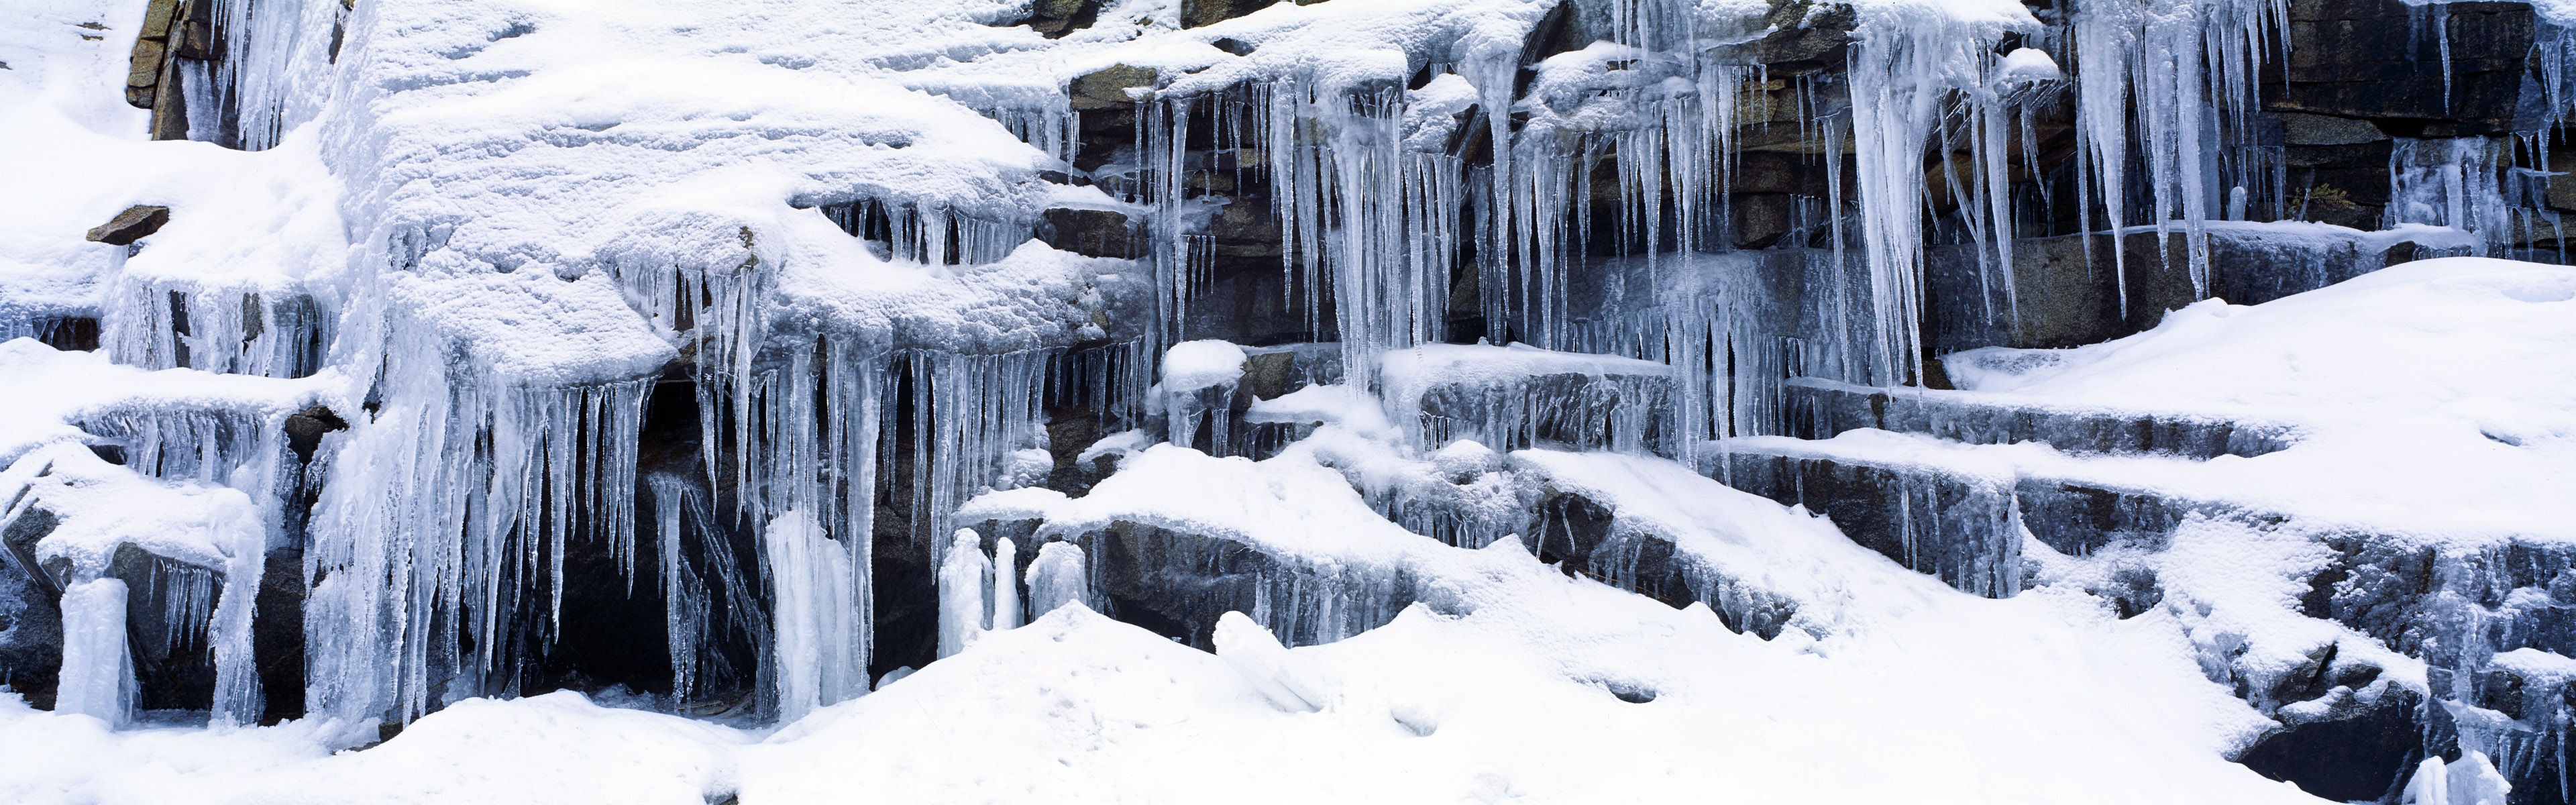 Schöne kalten Winter Schnee, Windows 8 Panorama-Widescreen-Wallpaper #7 - 3840x1200